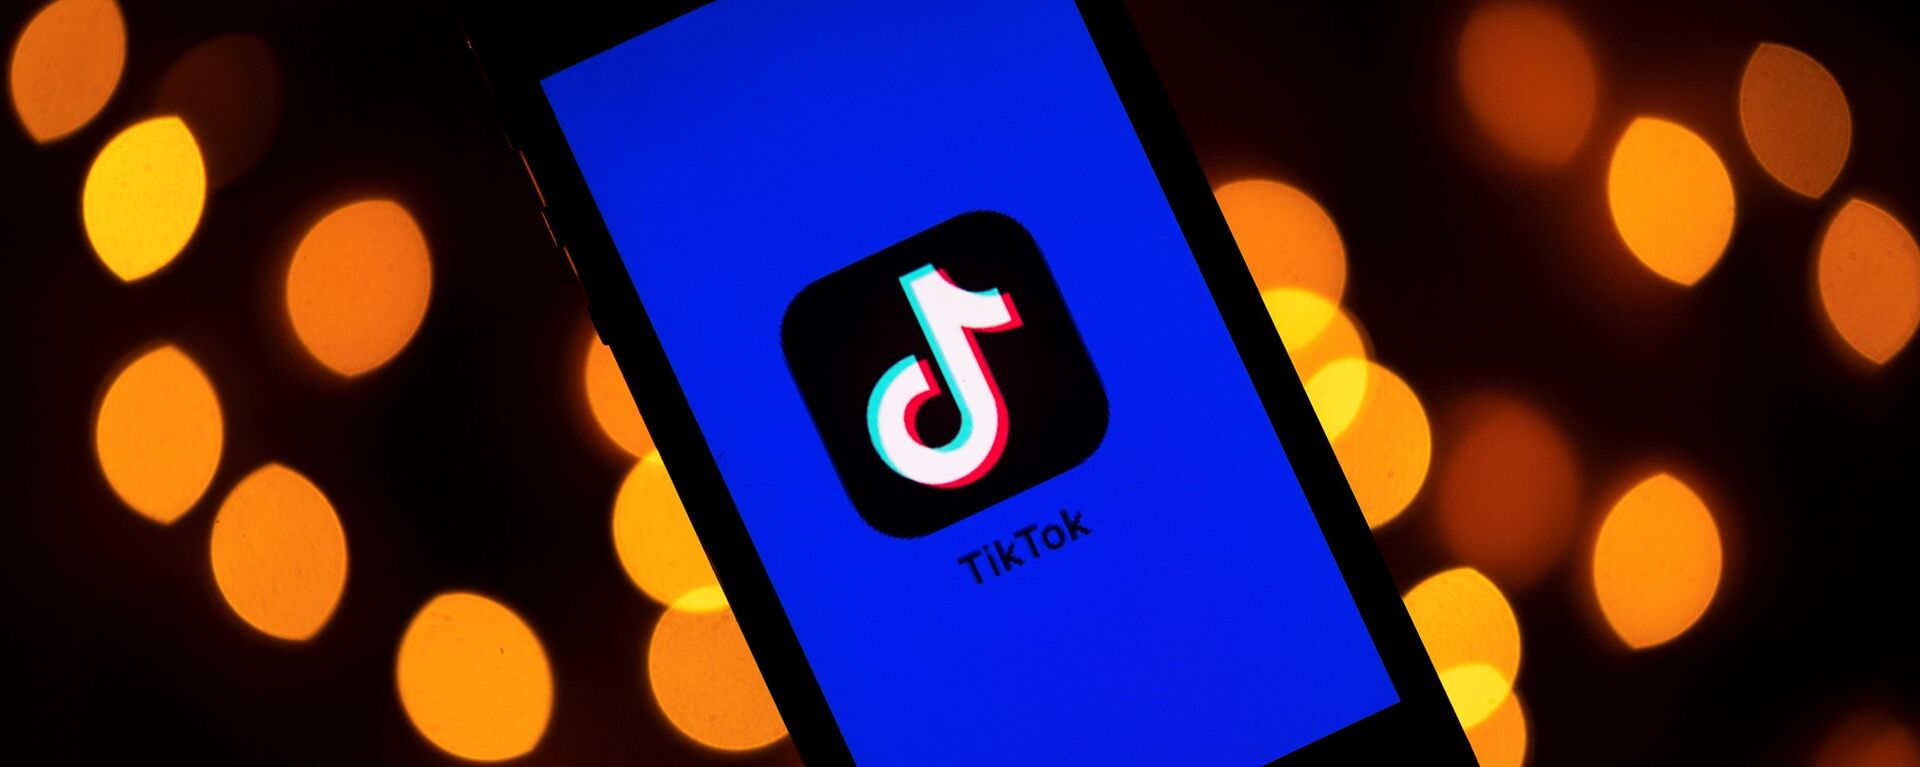 (FILES) This file photo taken on November 21, 2019 shows the logo of the social media video sharing app Tiktok displayed on a tablet screen in Paris - Sputnik International, 1920, 09.09.2020